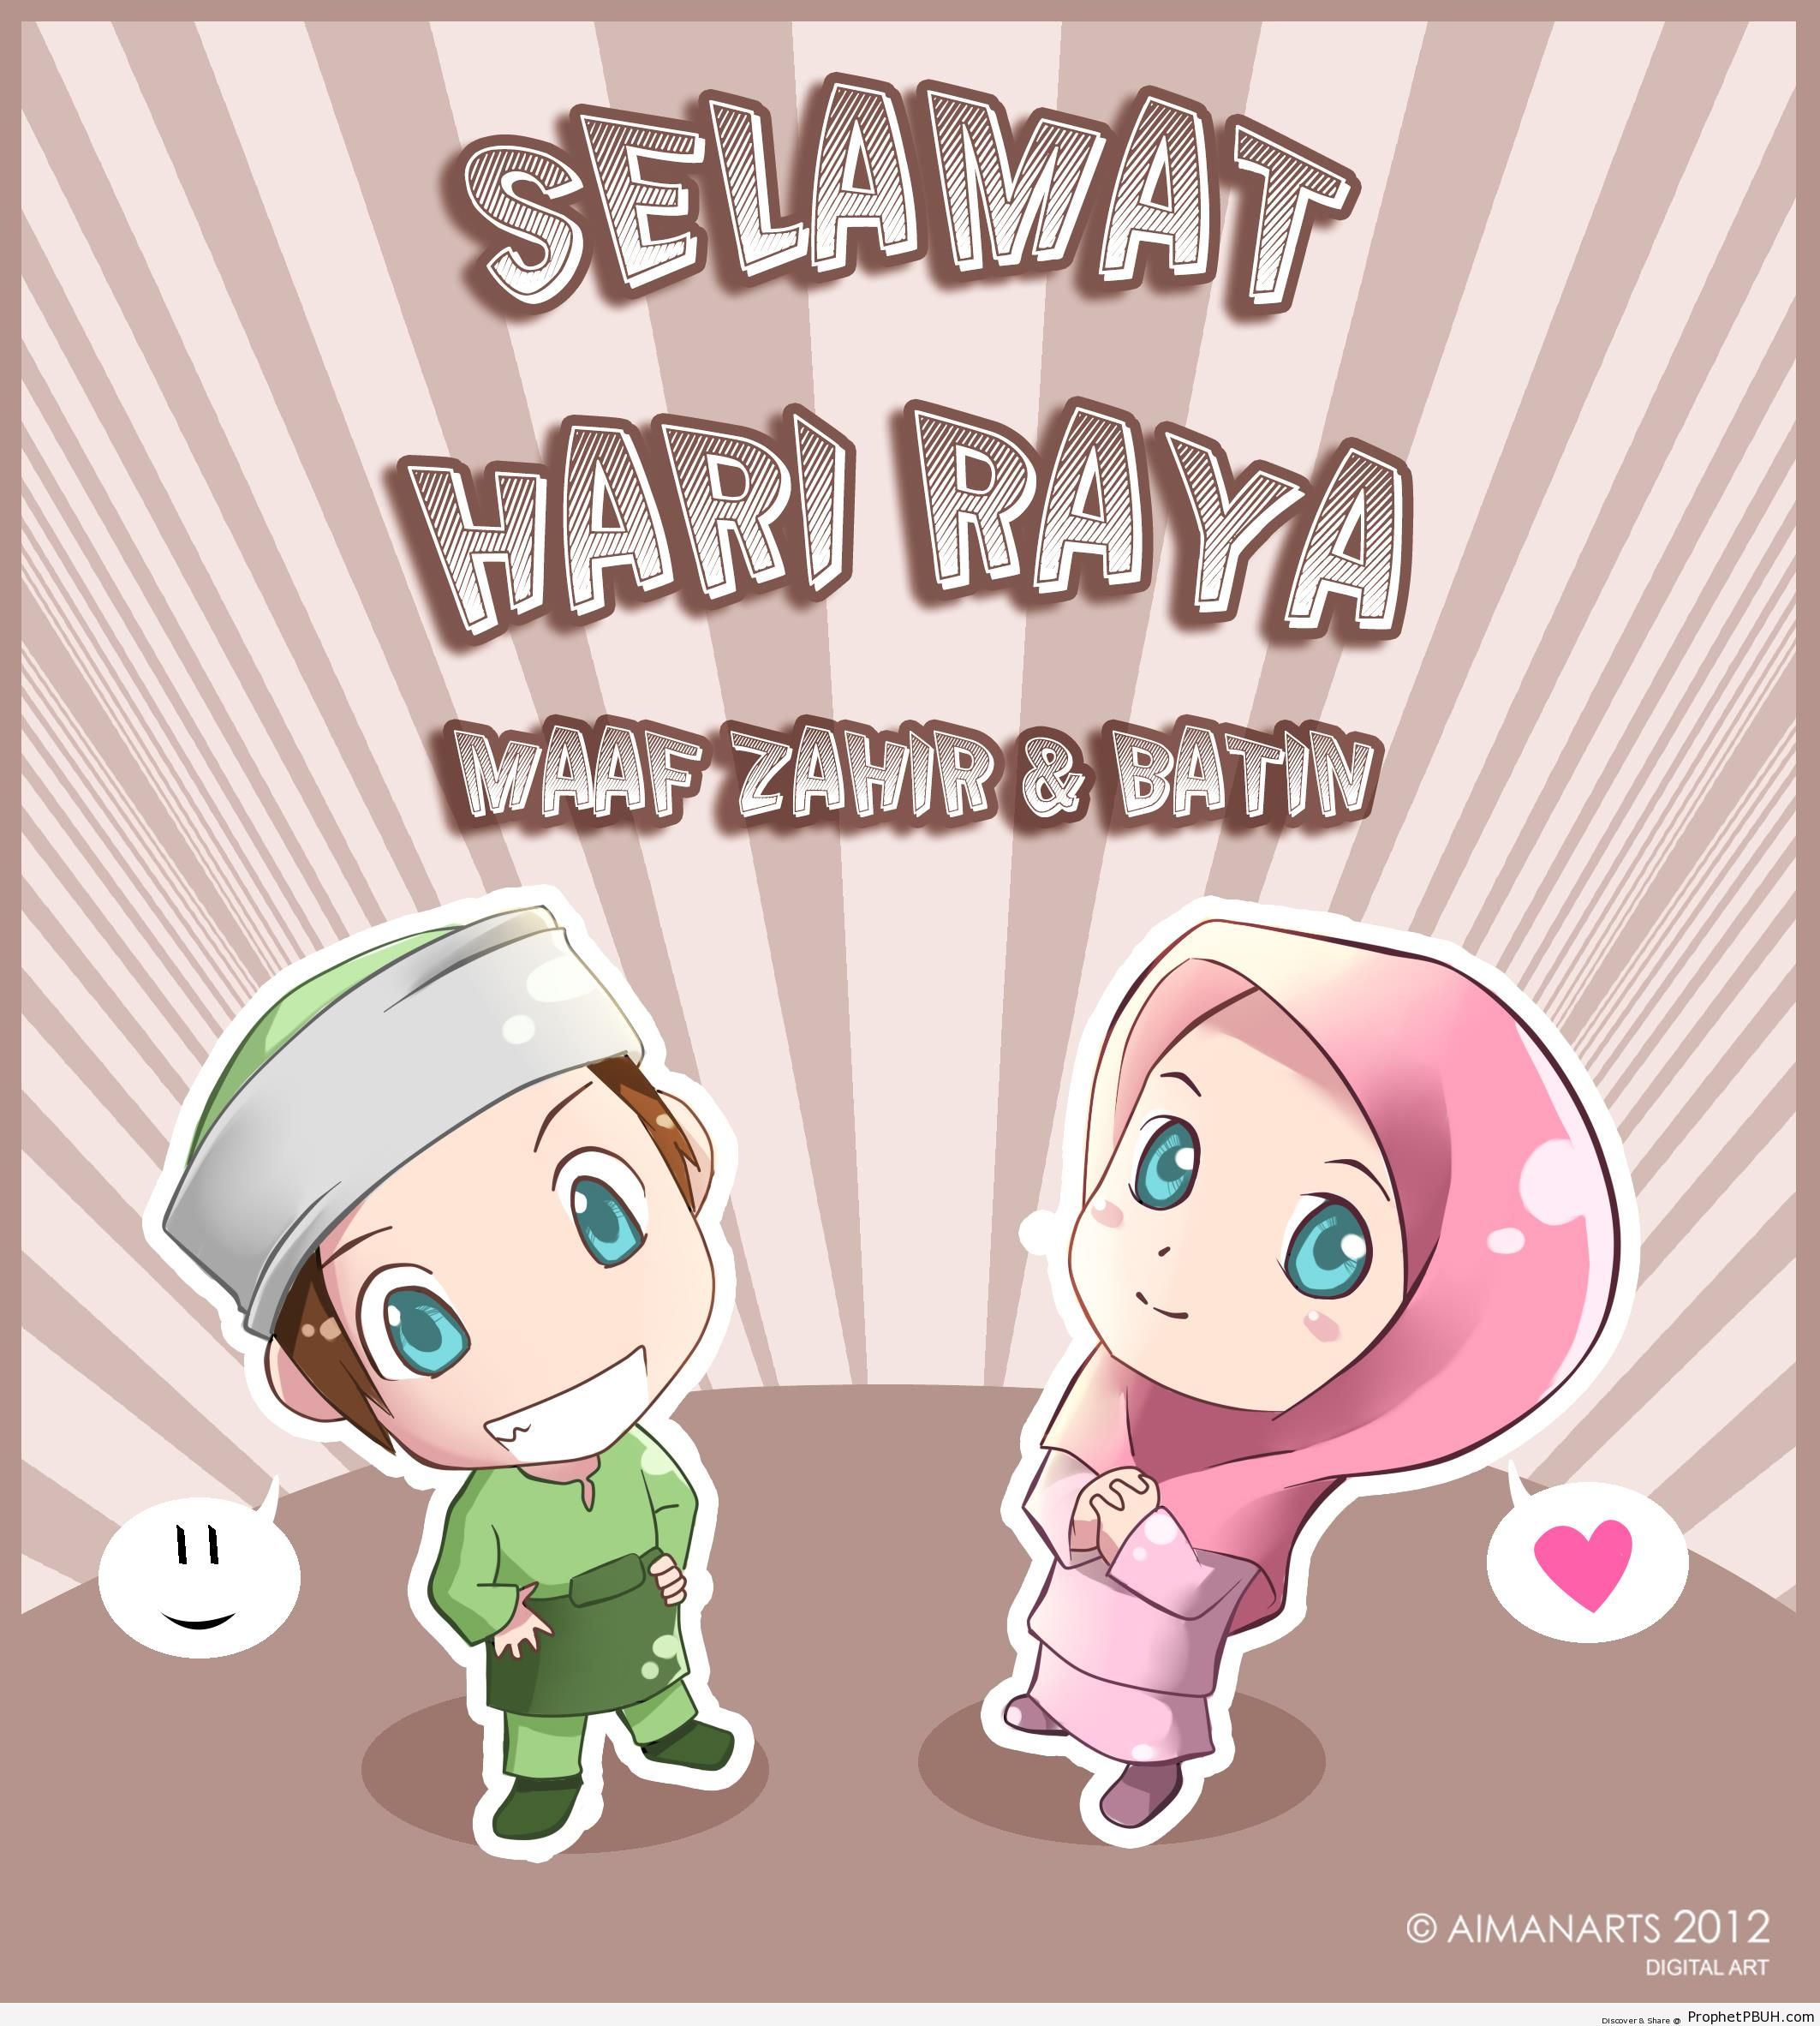 Selamat Hari Raya (Malaysian Happy Eid Greeting) on Image of Little Muslim Boy and Girl - Drawings of Children 